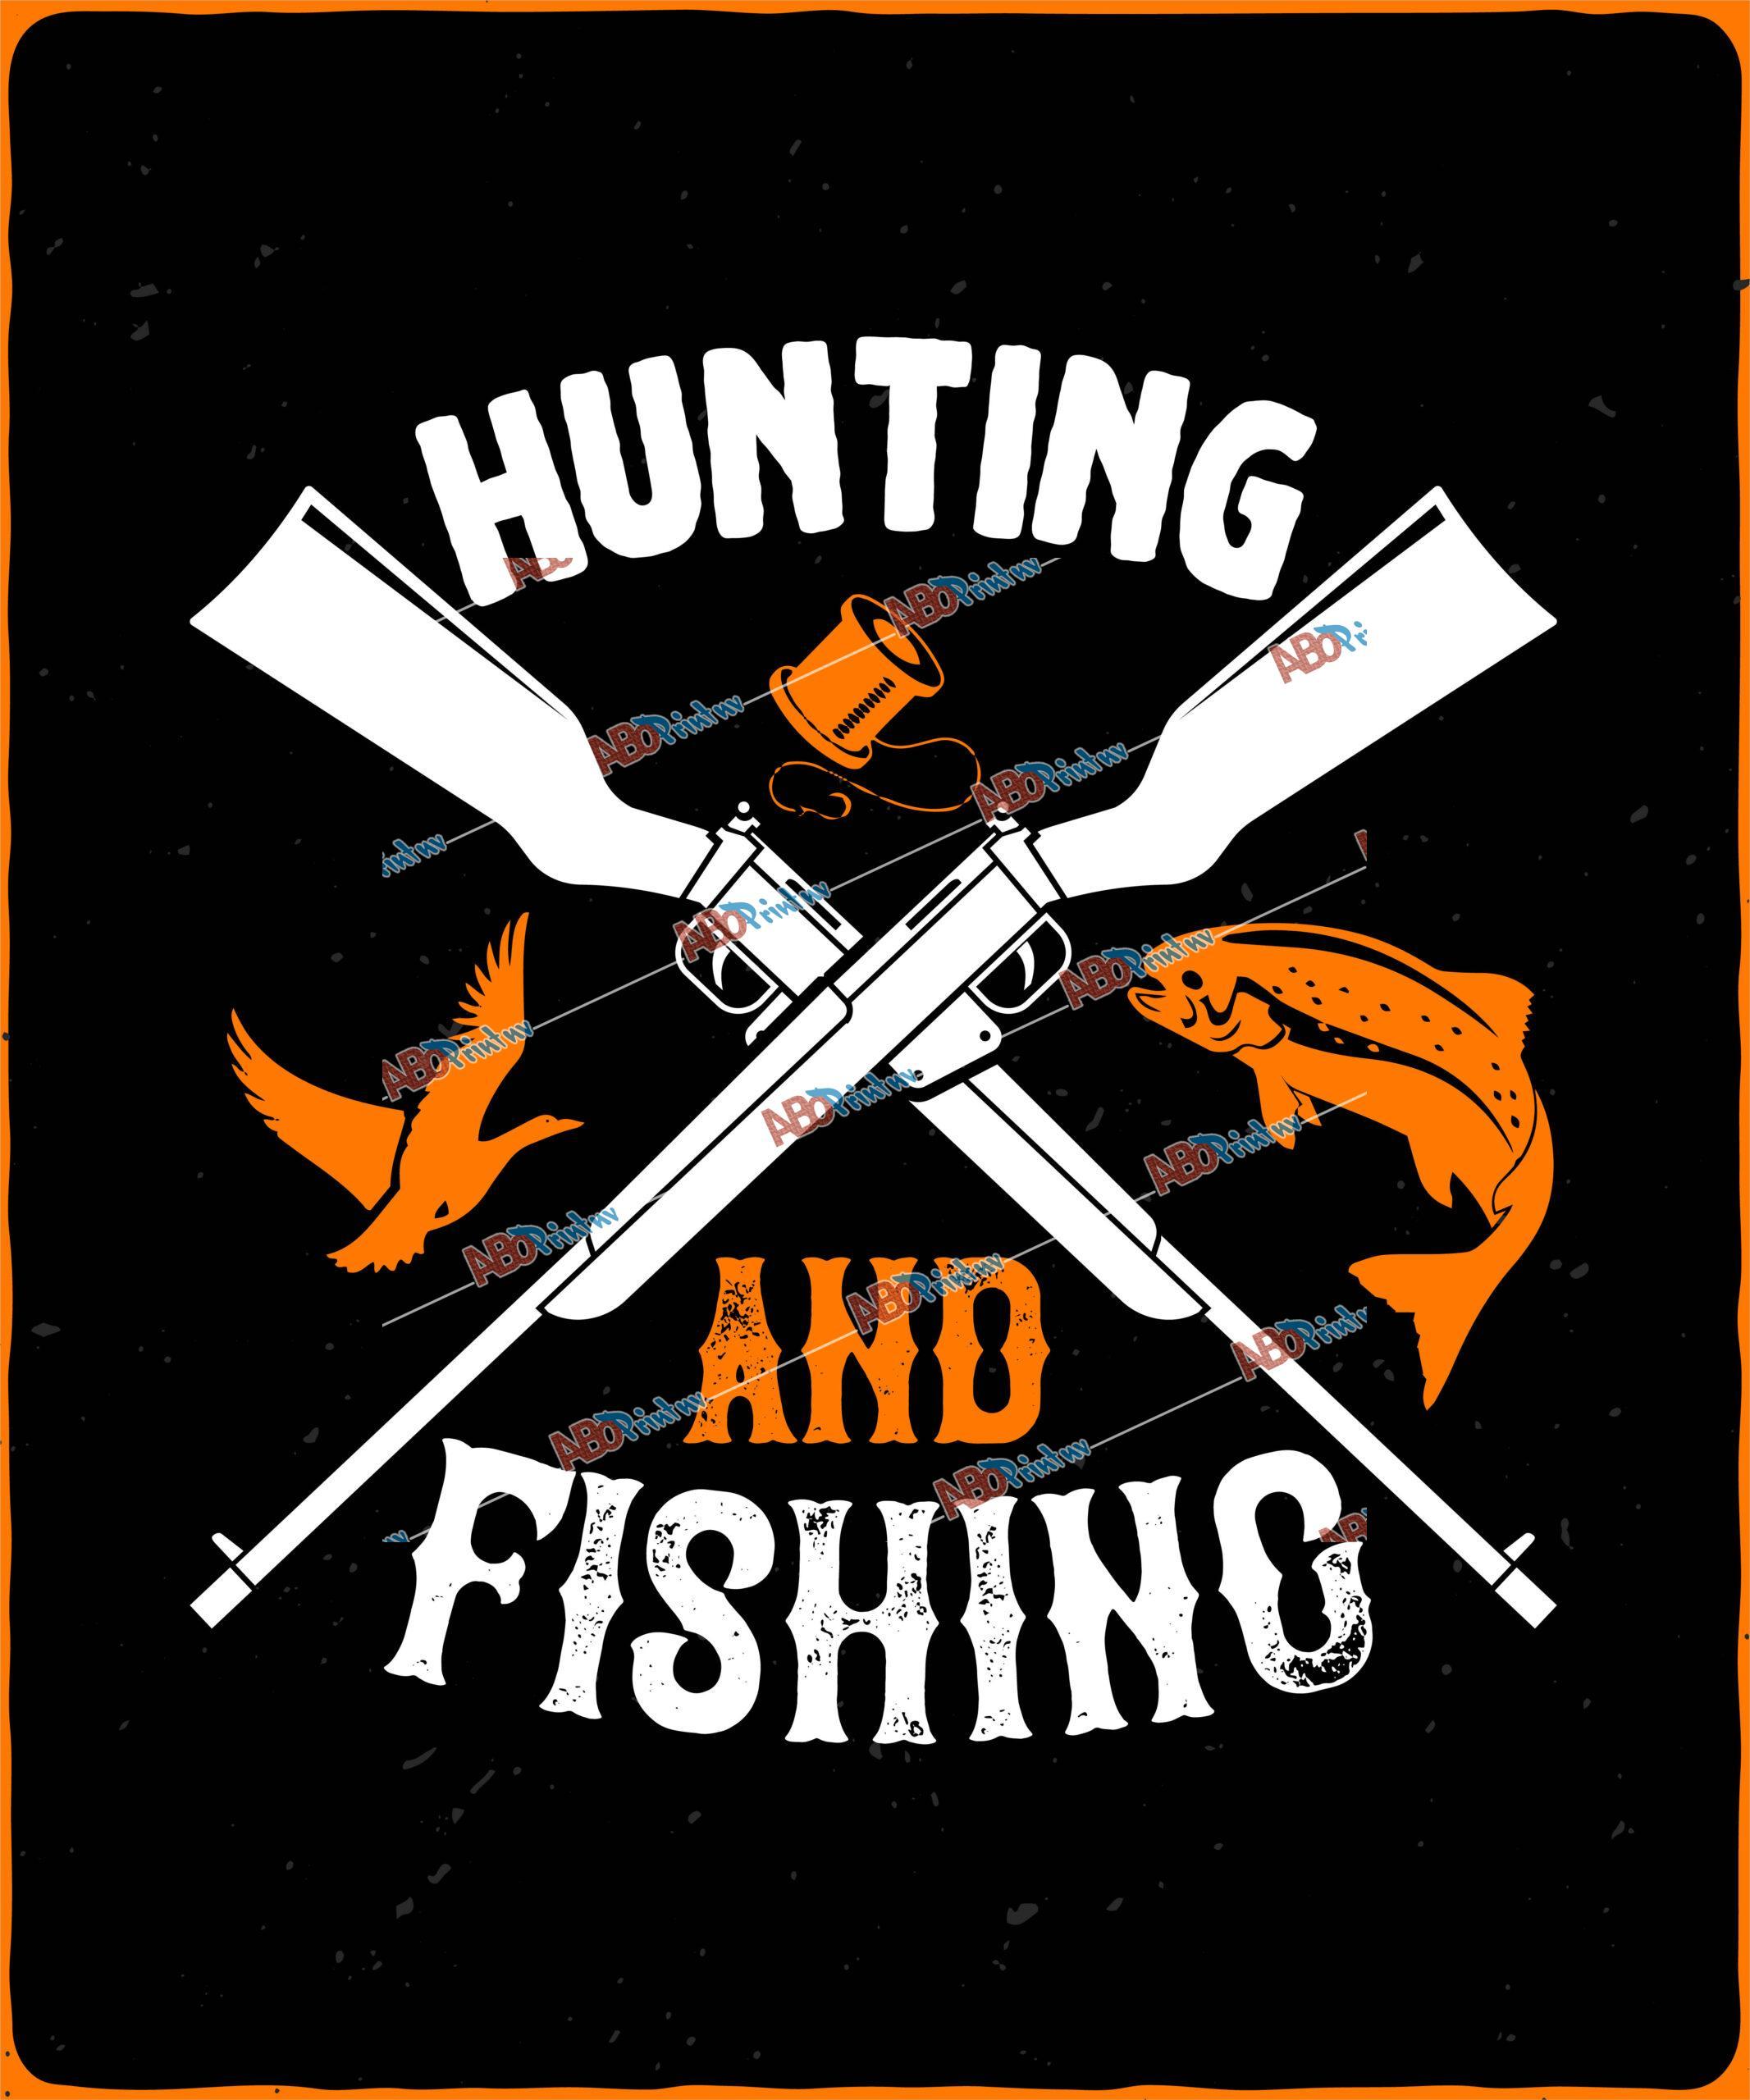 Hunting and fishing